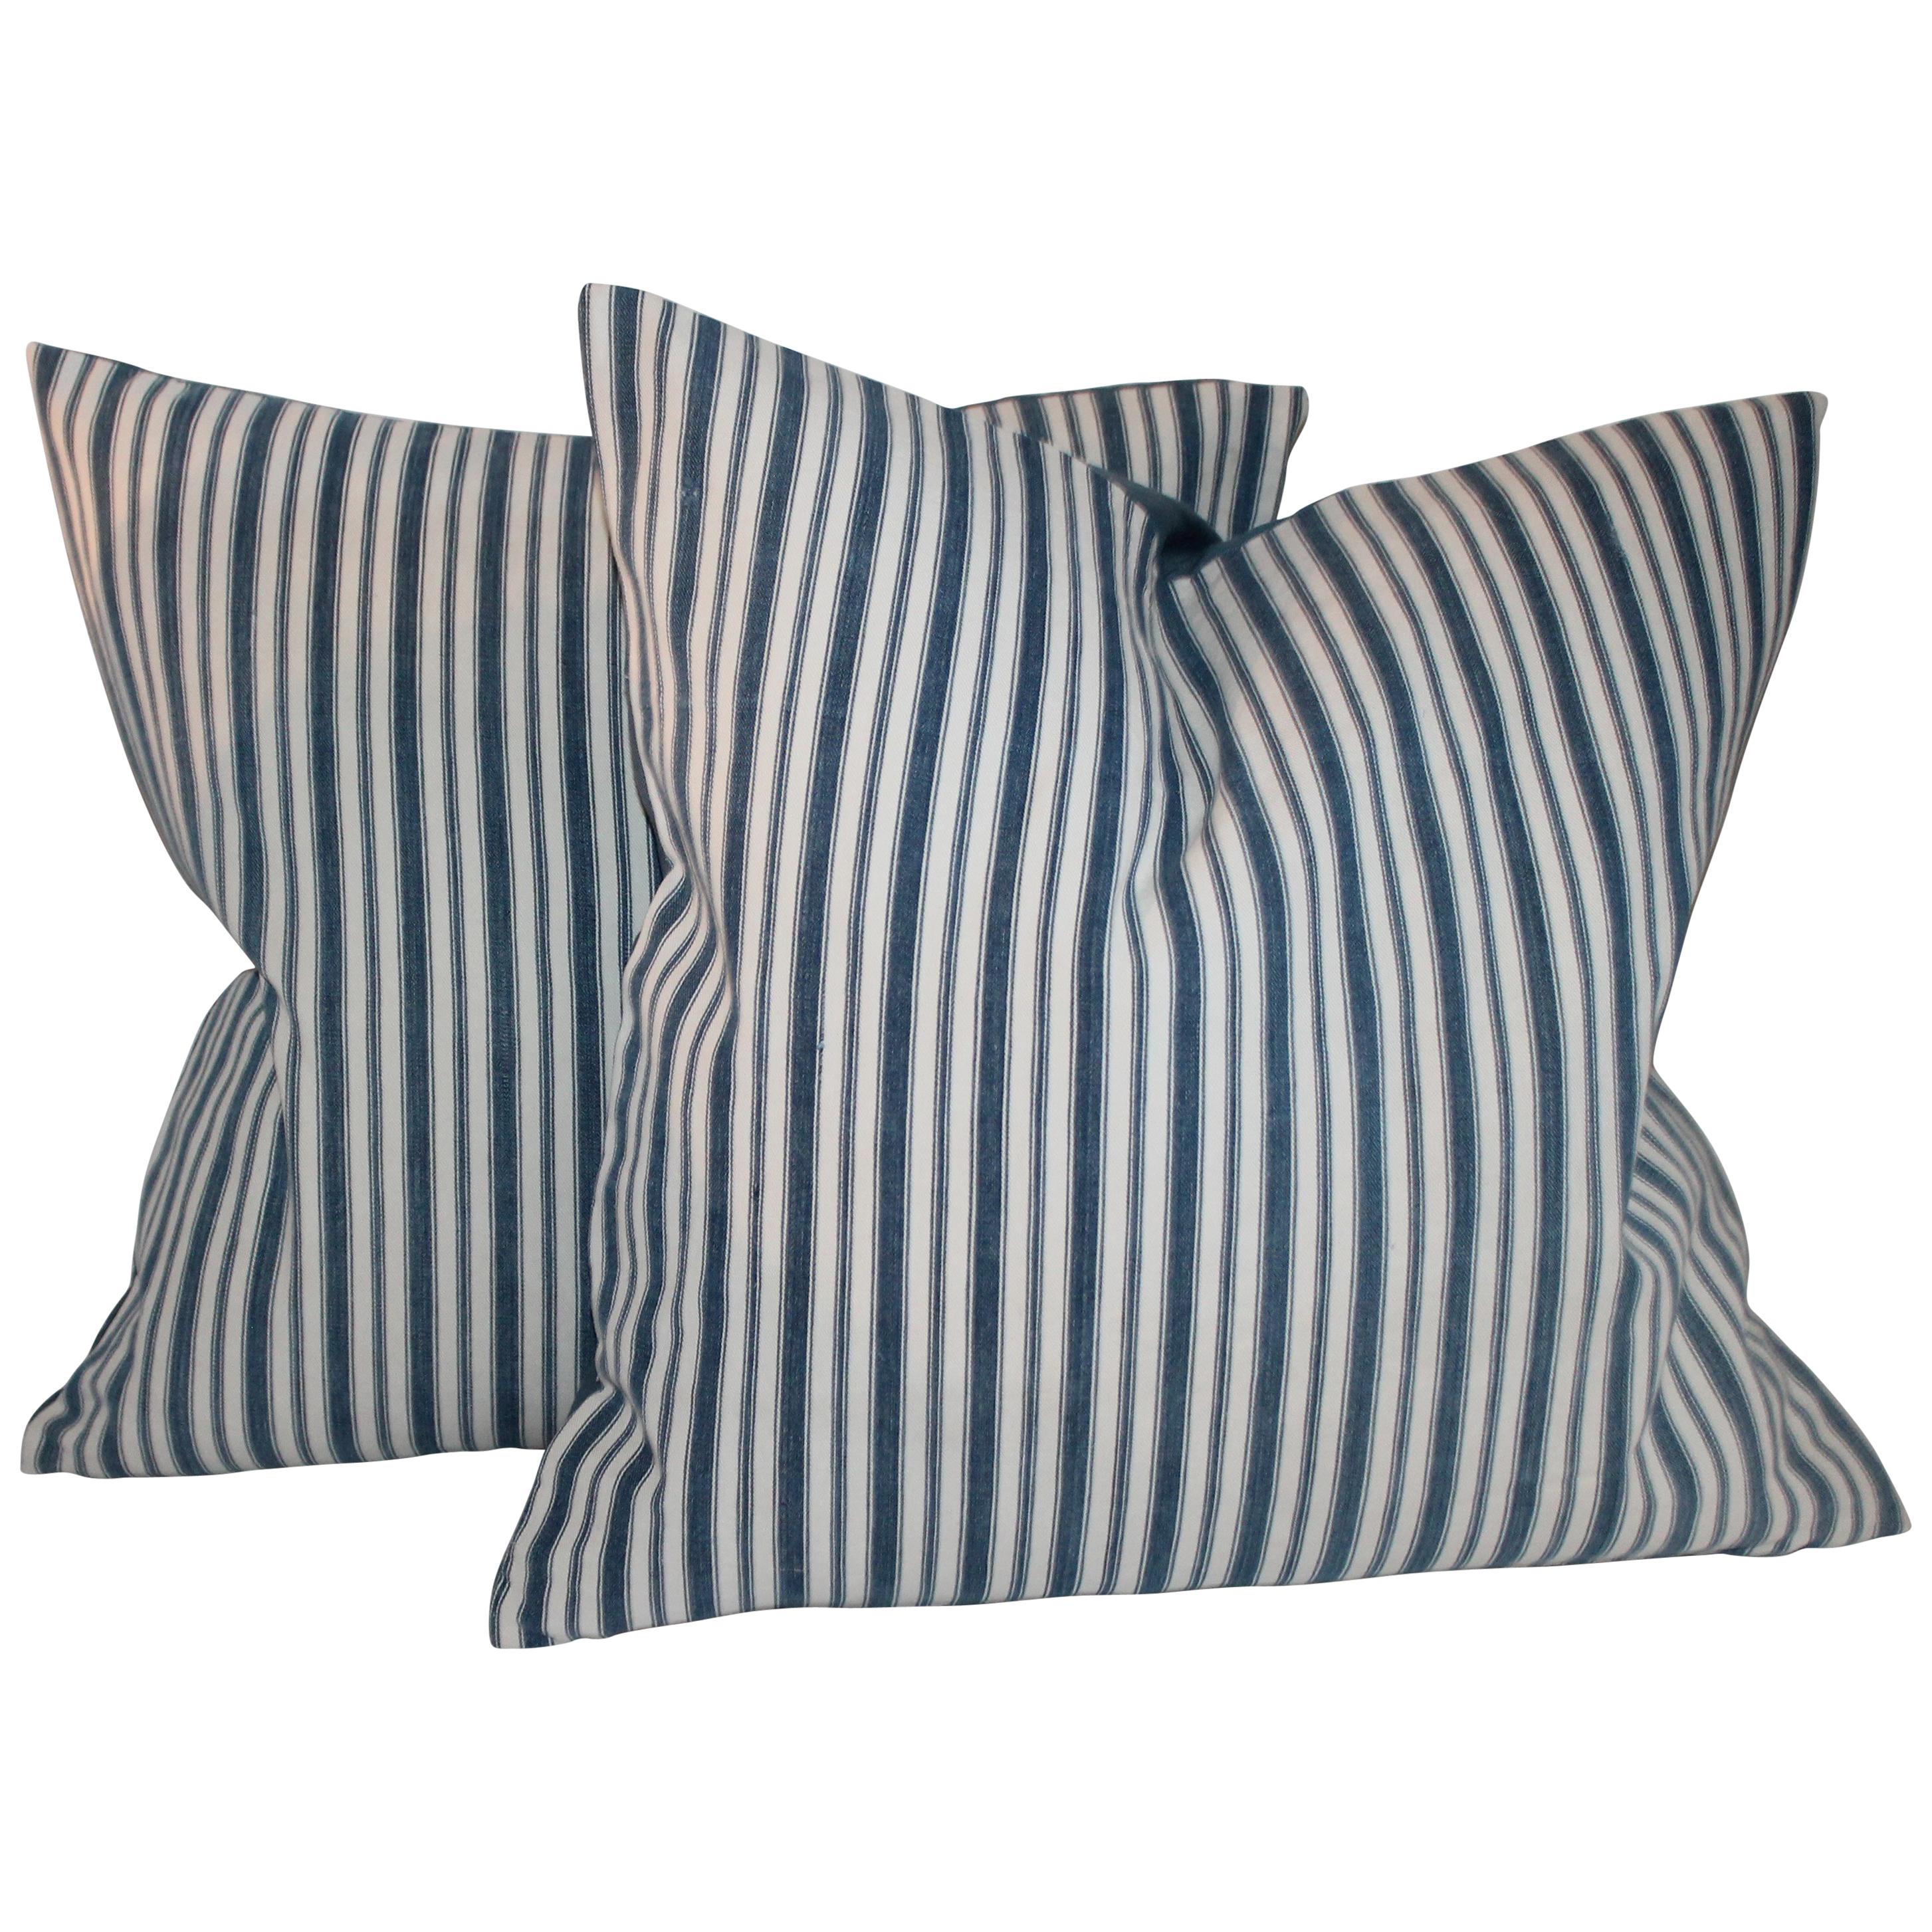 19th Century Blue and White Ticking Stripe Pillows, Pair